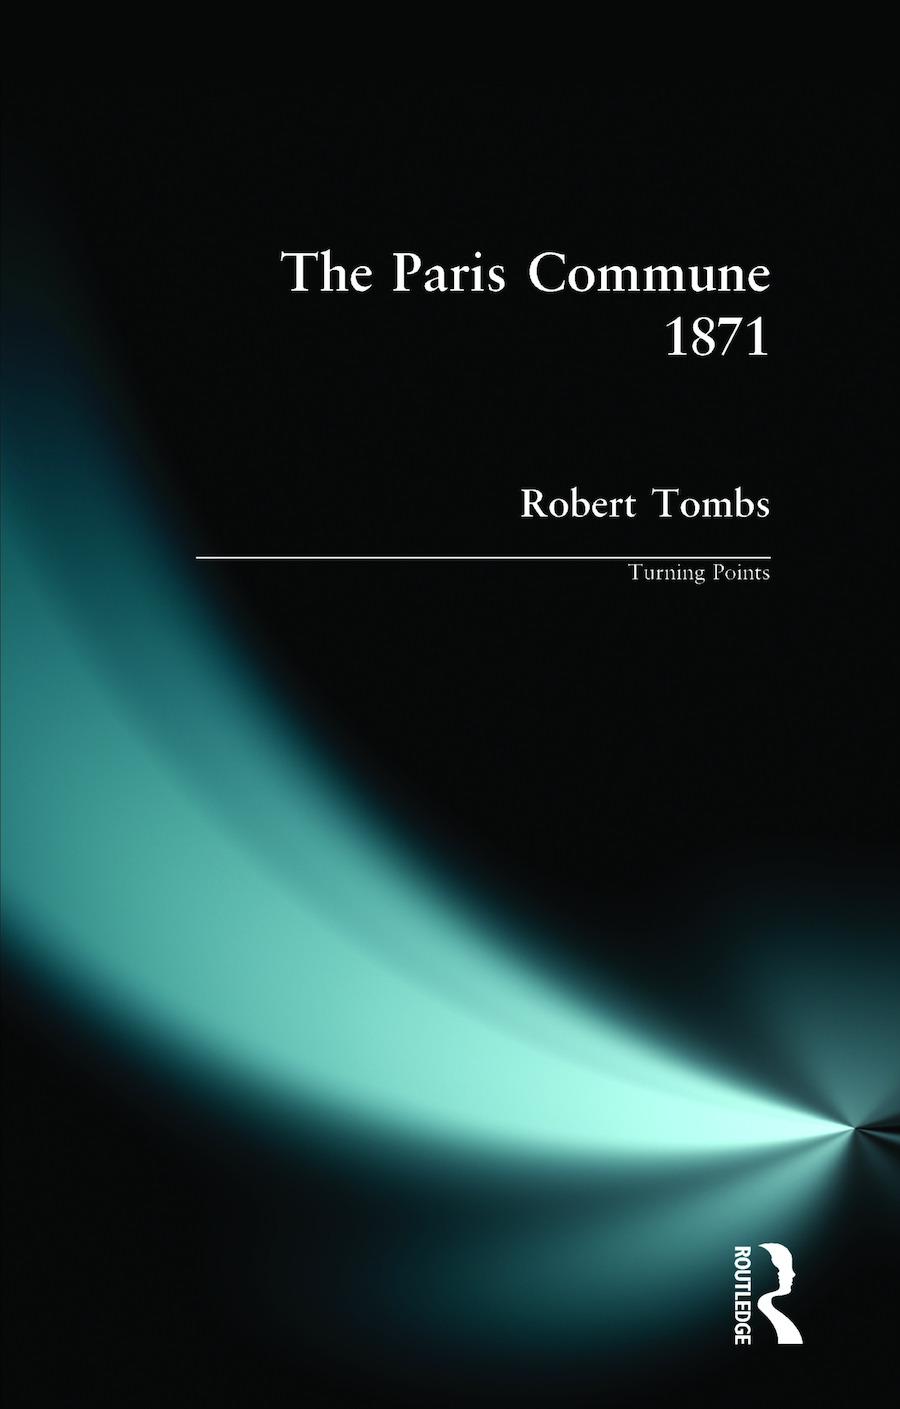 Tombs, R: The Paris Commune 1871 - Robert Tombs (University of Cambridge, UK)